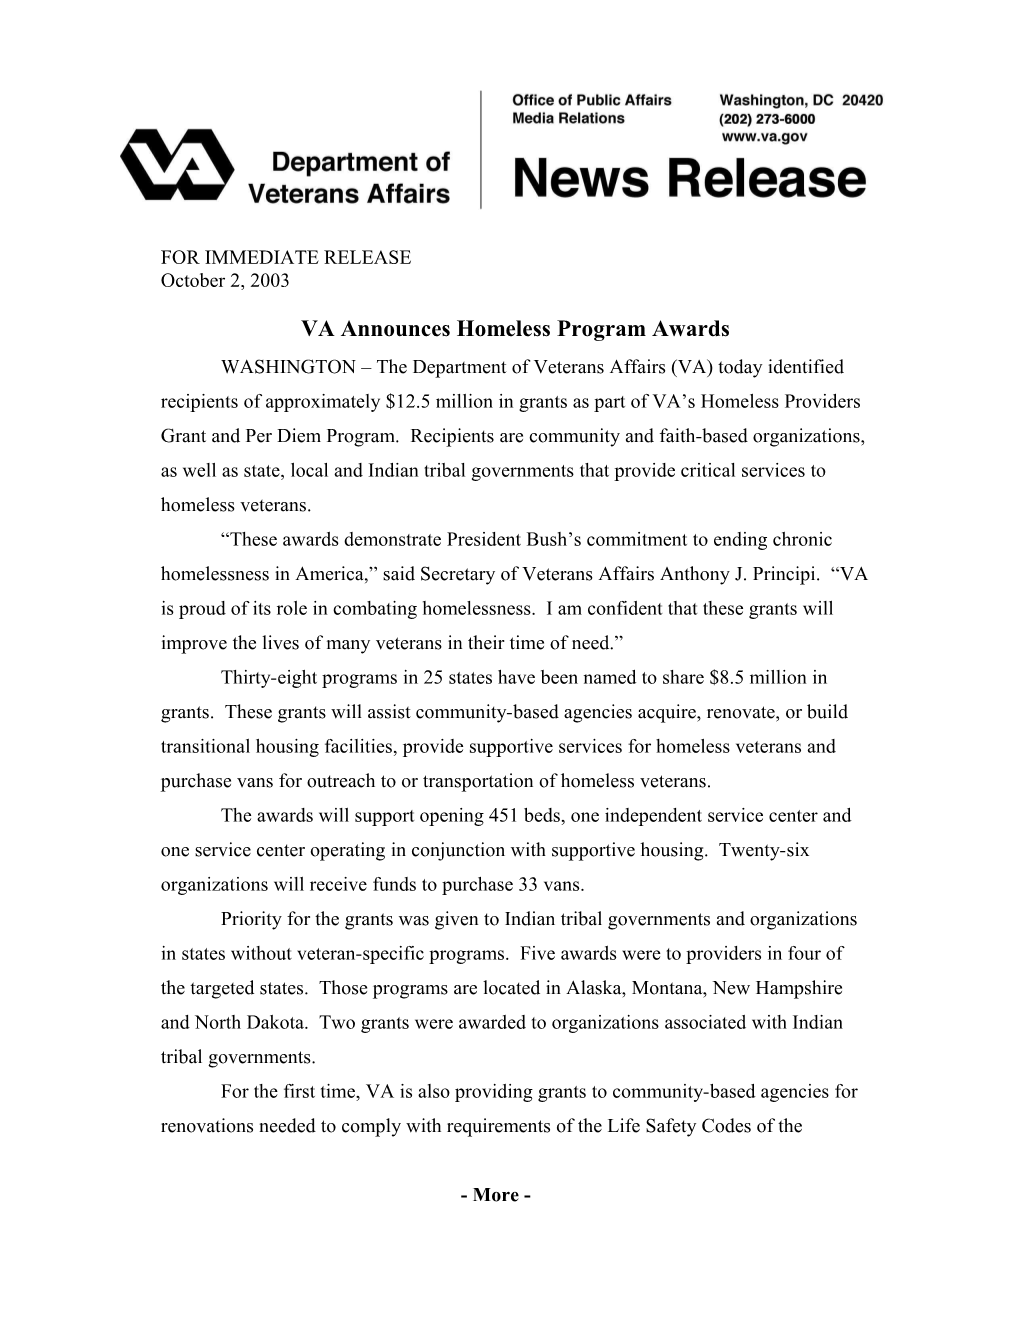 VA Announces Homeless Program Awards